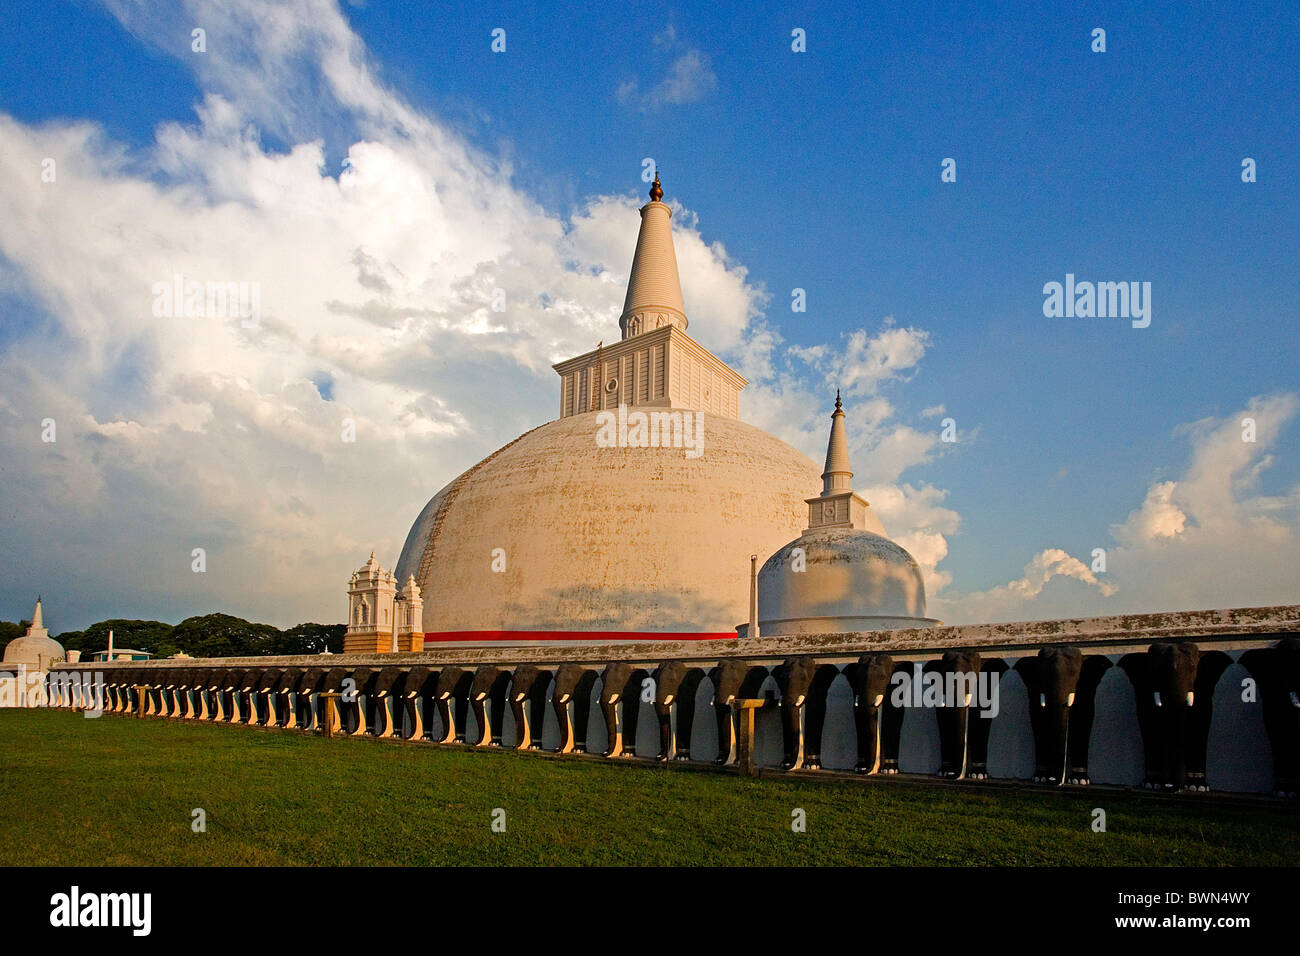 Asie Sri Lanka Anuradhapura villes anciennes site du patrimoine mondial de l'Dagoba Ruvanvelisaya bouddhisme Stupa cul Banque D'Images